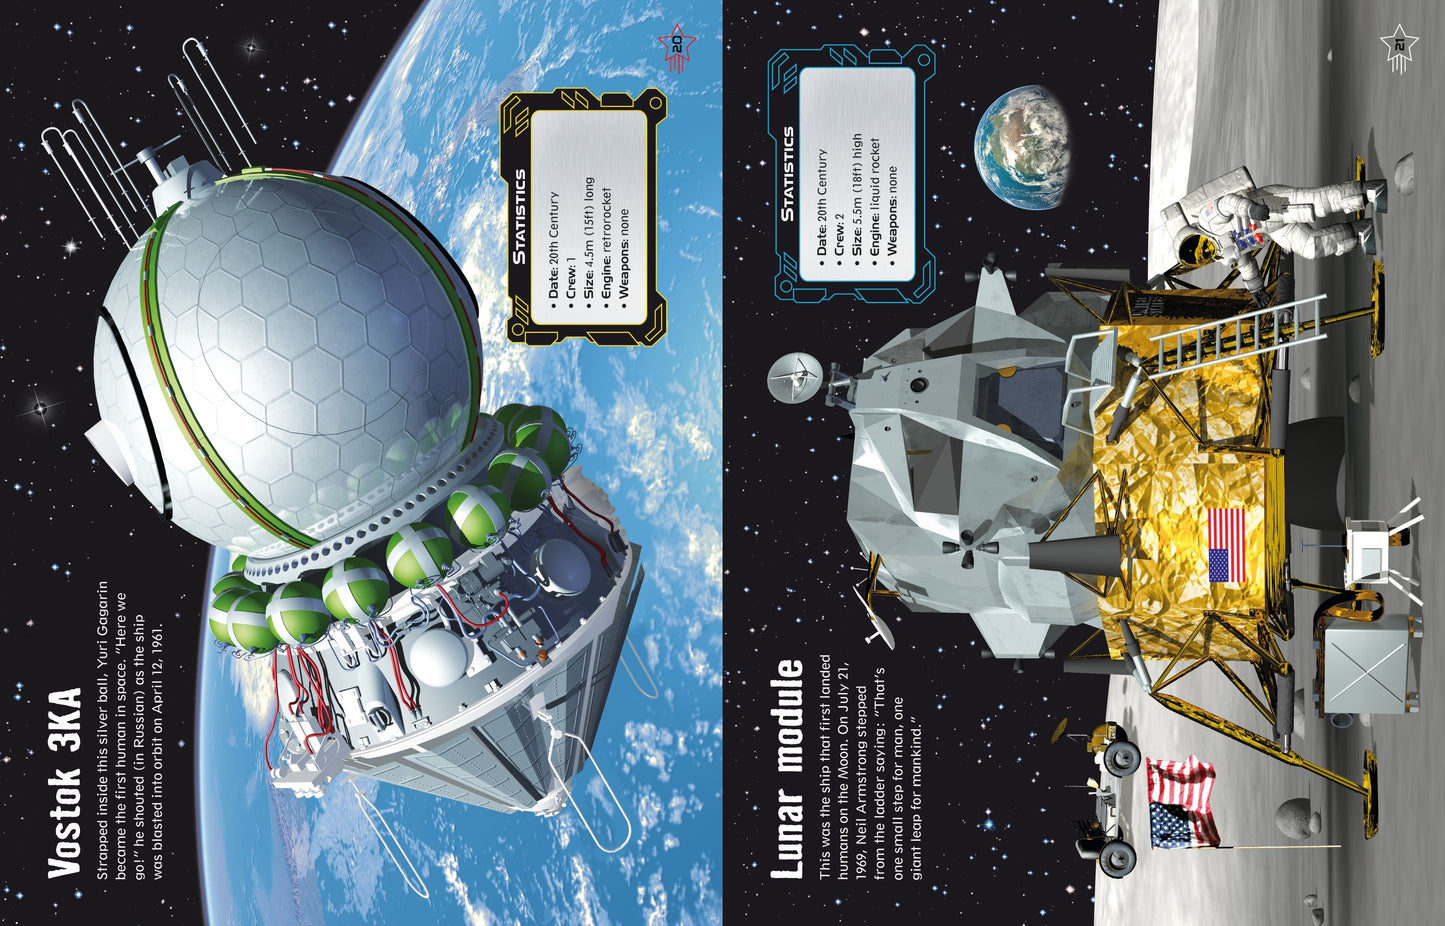 Build Your Own Spaceships Sticker Book